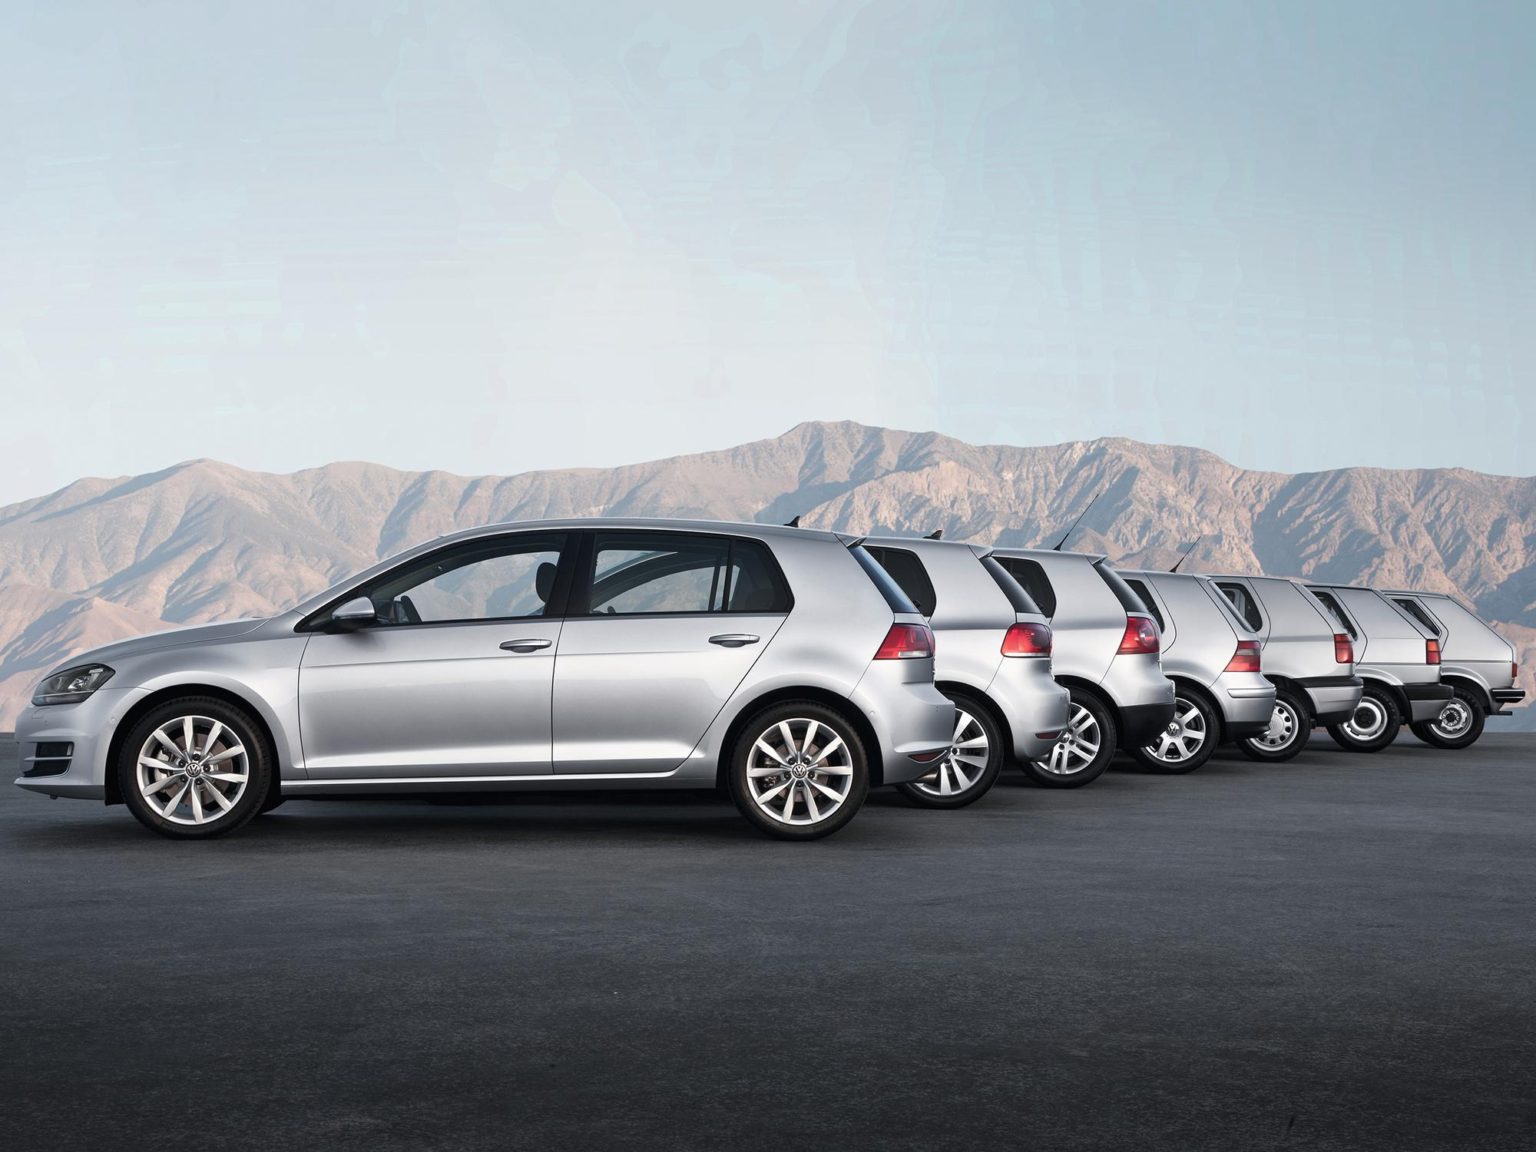 Volkswagen has sold seven generations of the Golf in the U.S.